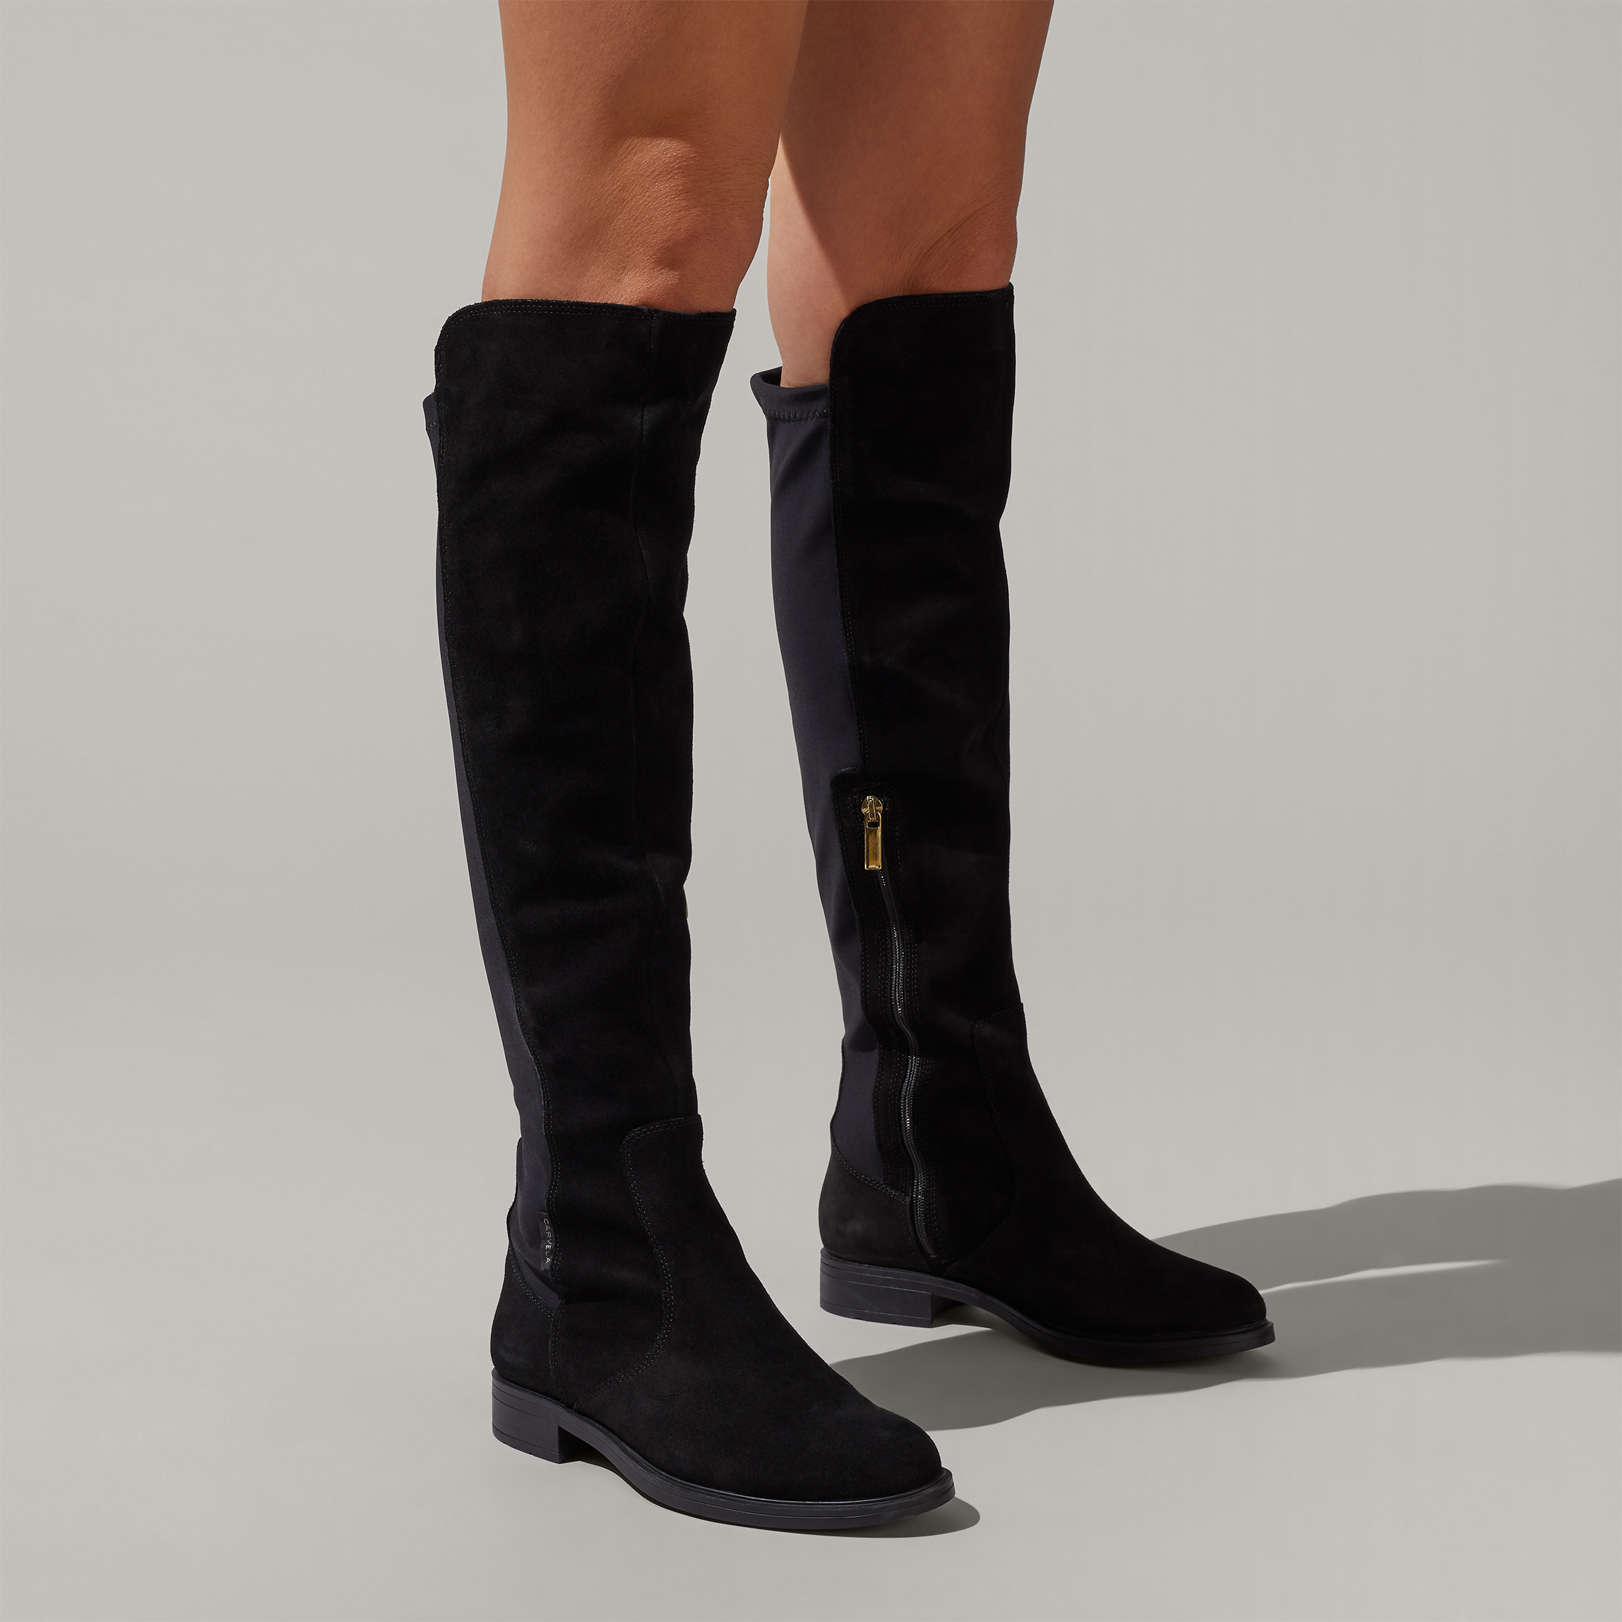 WALNUT - CARVELA High Leg Boots